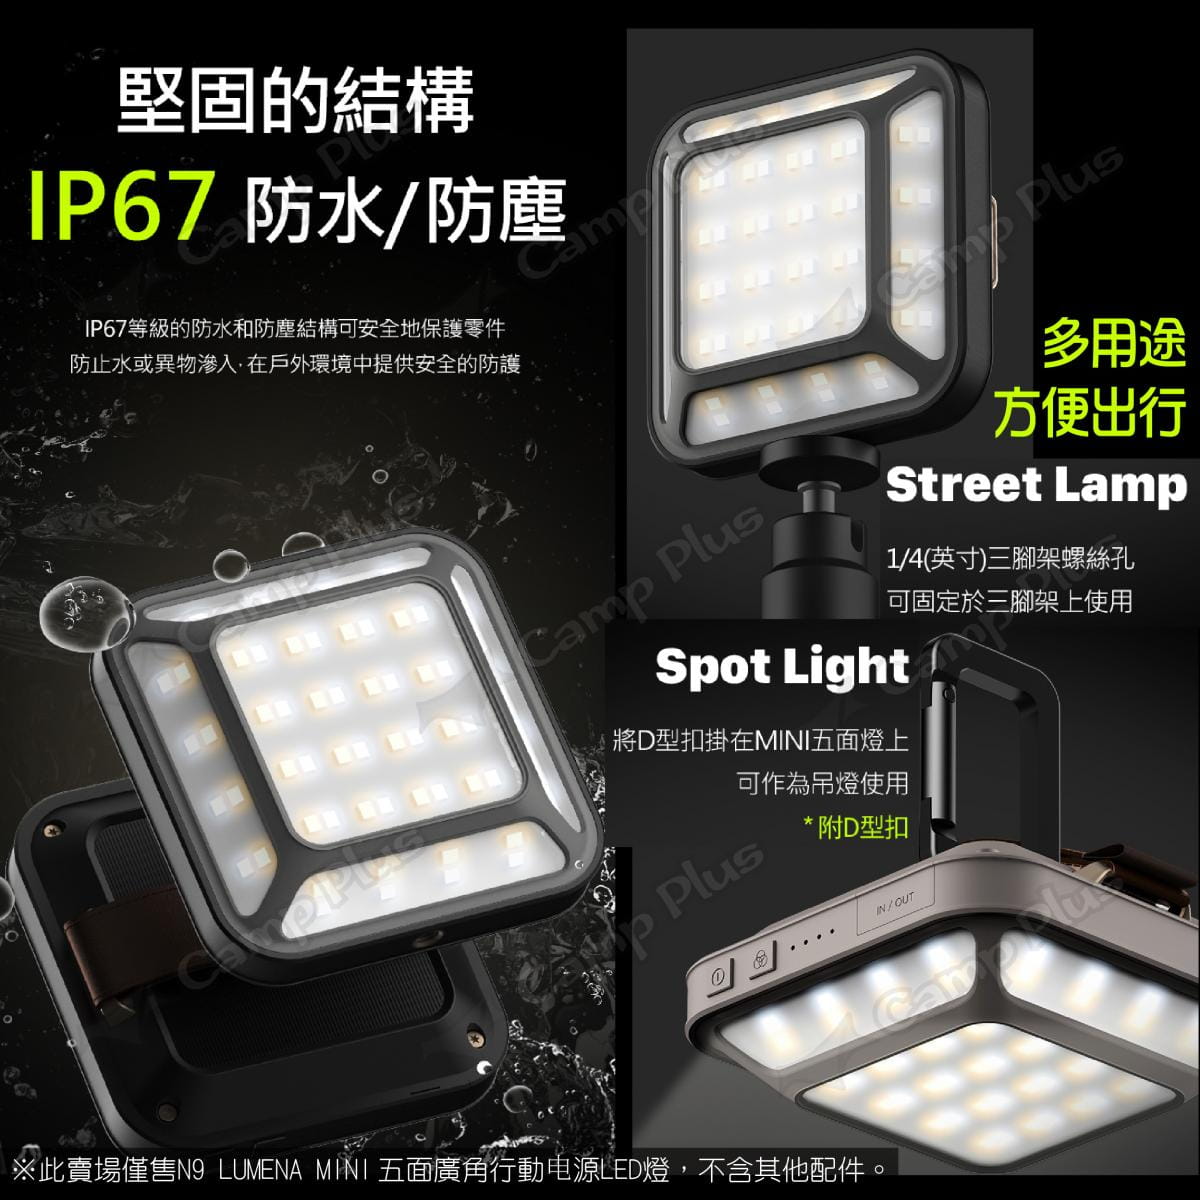 【N9 LUMENA】MINI 五面廣角行動電源LED燈 (悠遊戶外) 4